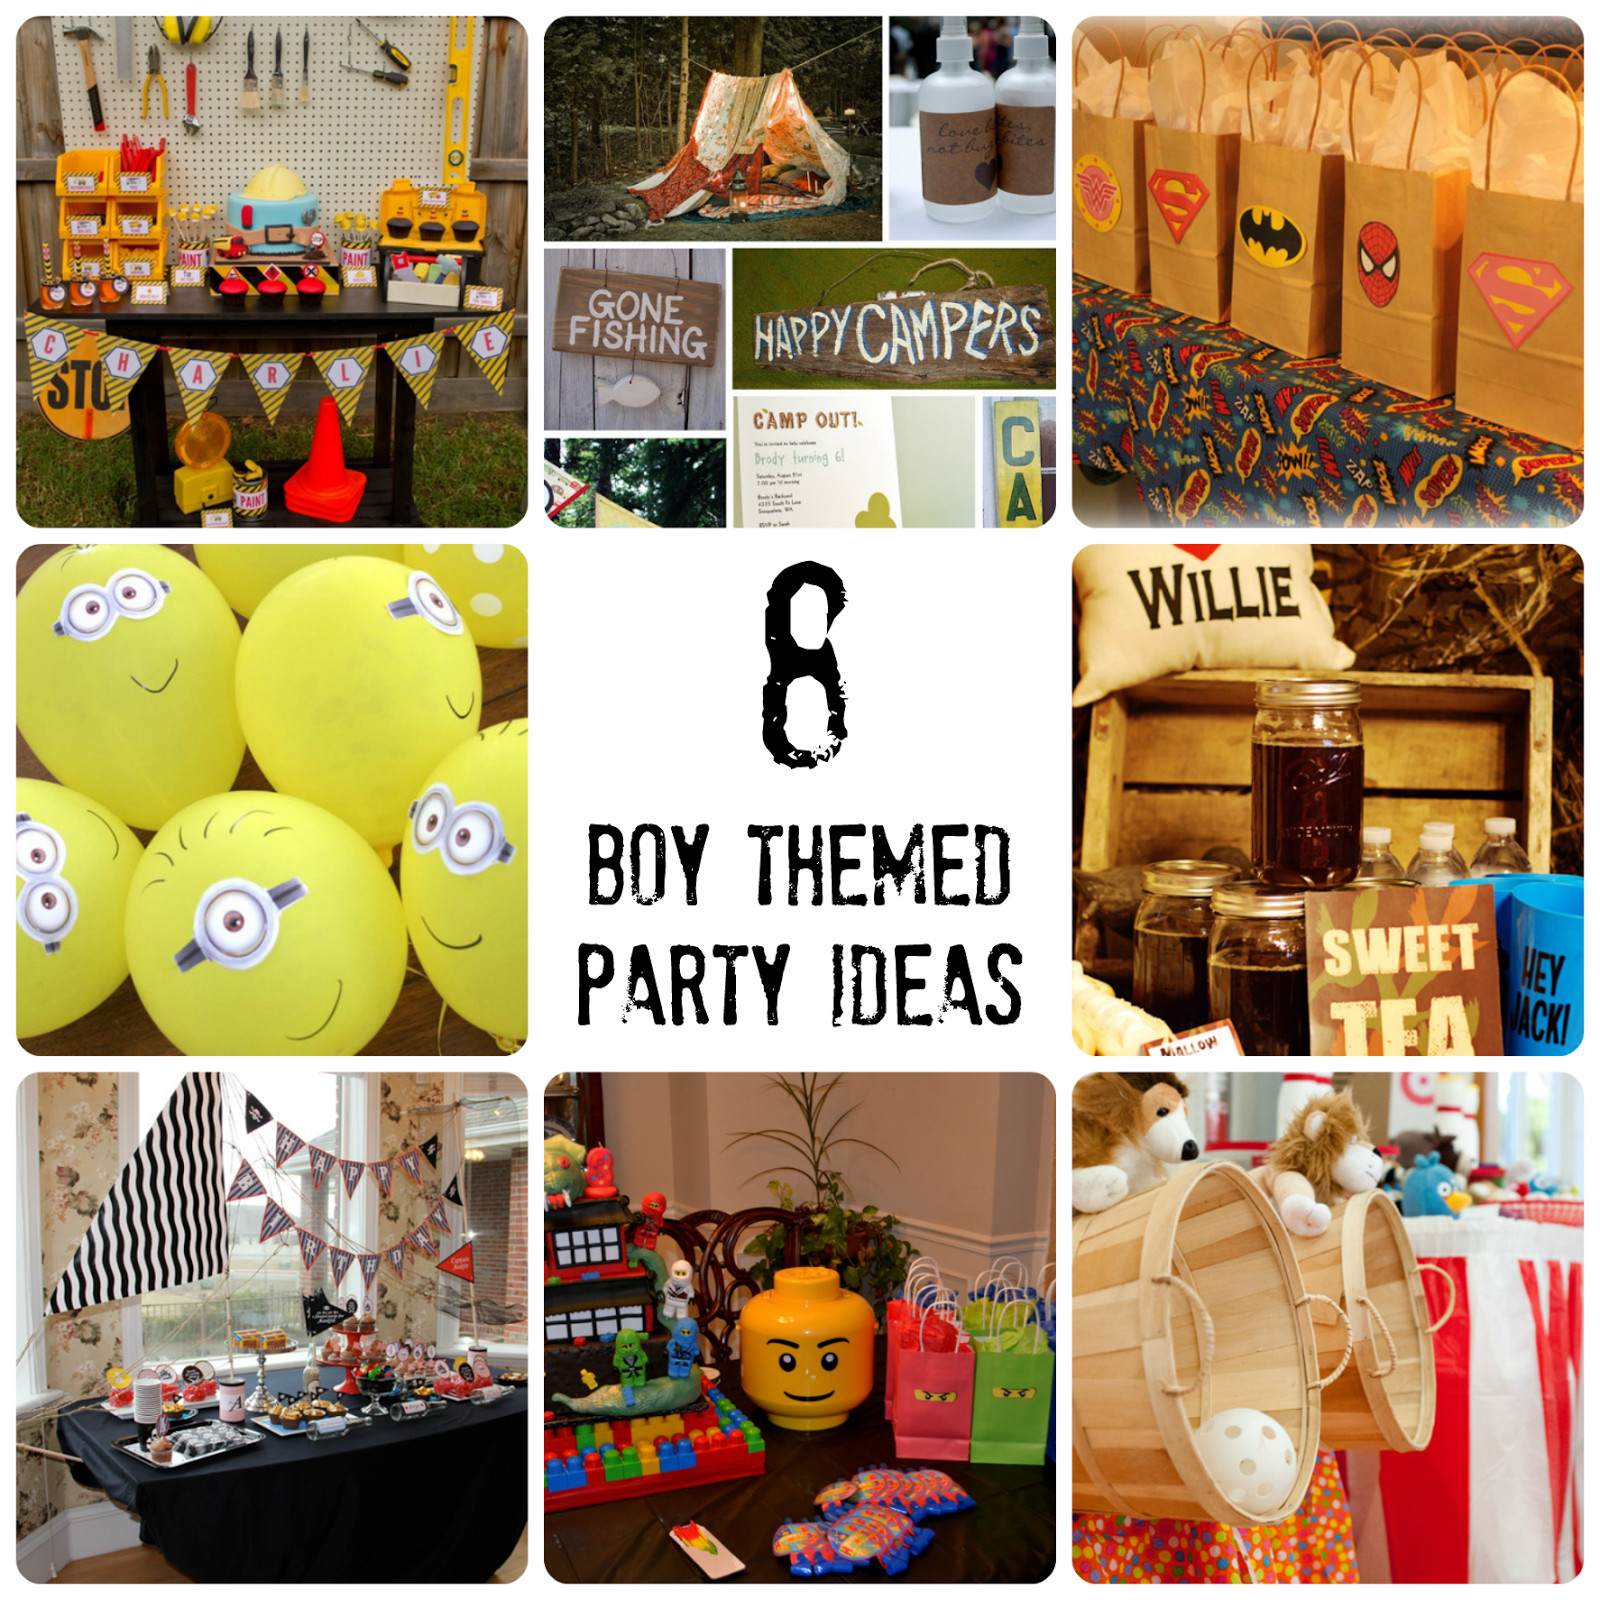 Best ideas about Boys Birthday Party Ideas
. Save or Pin Boy Themed Birthday Party Ideas Now.